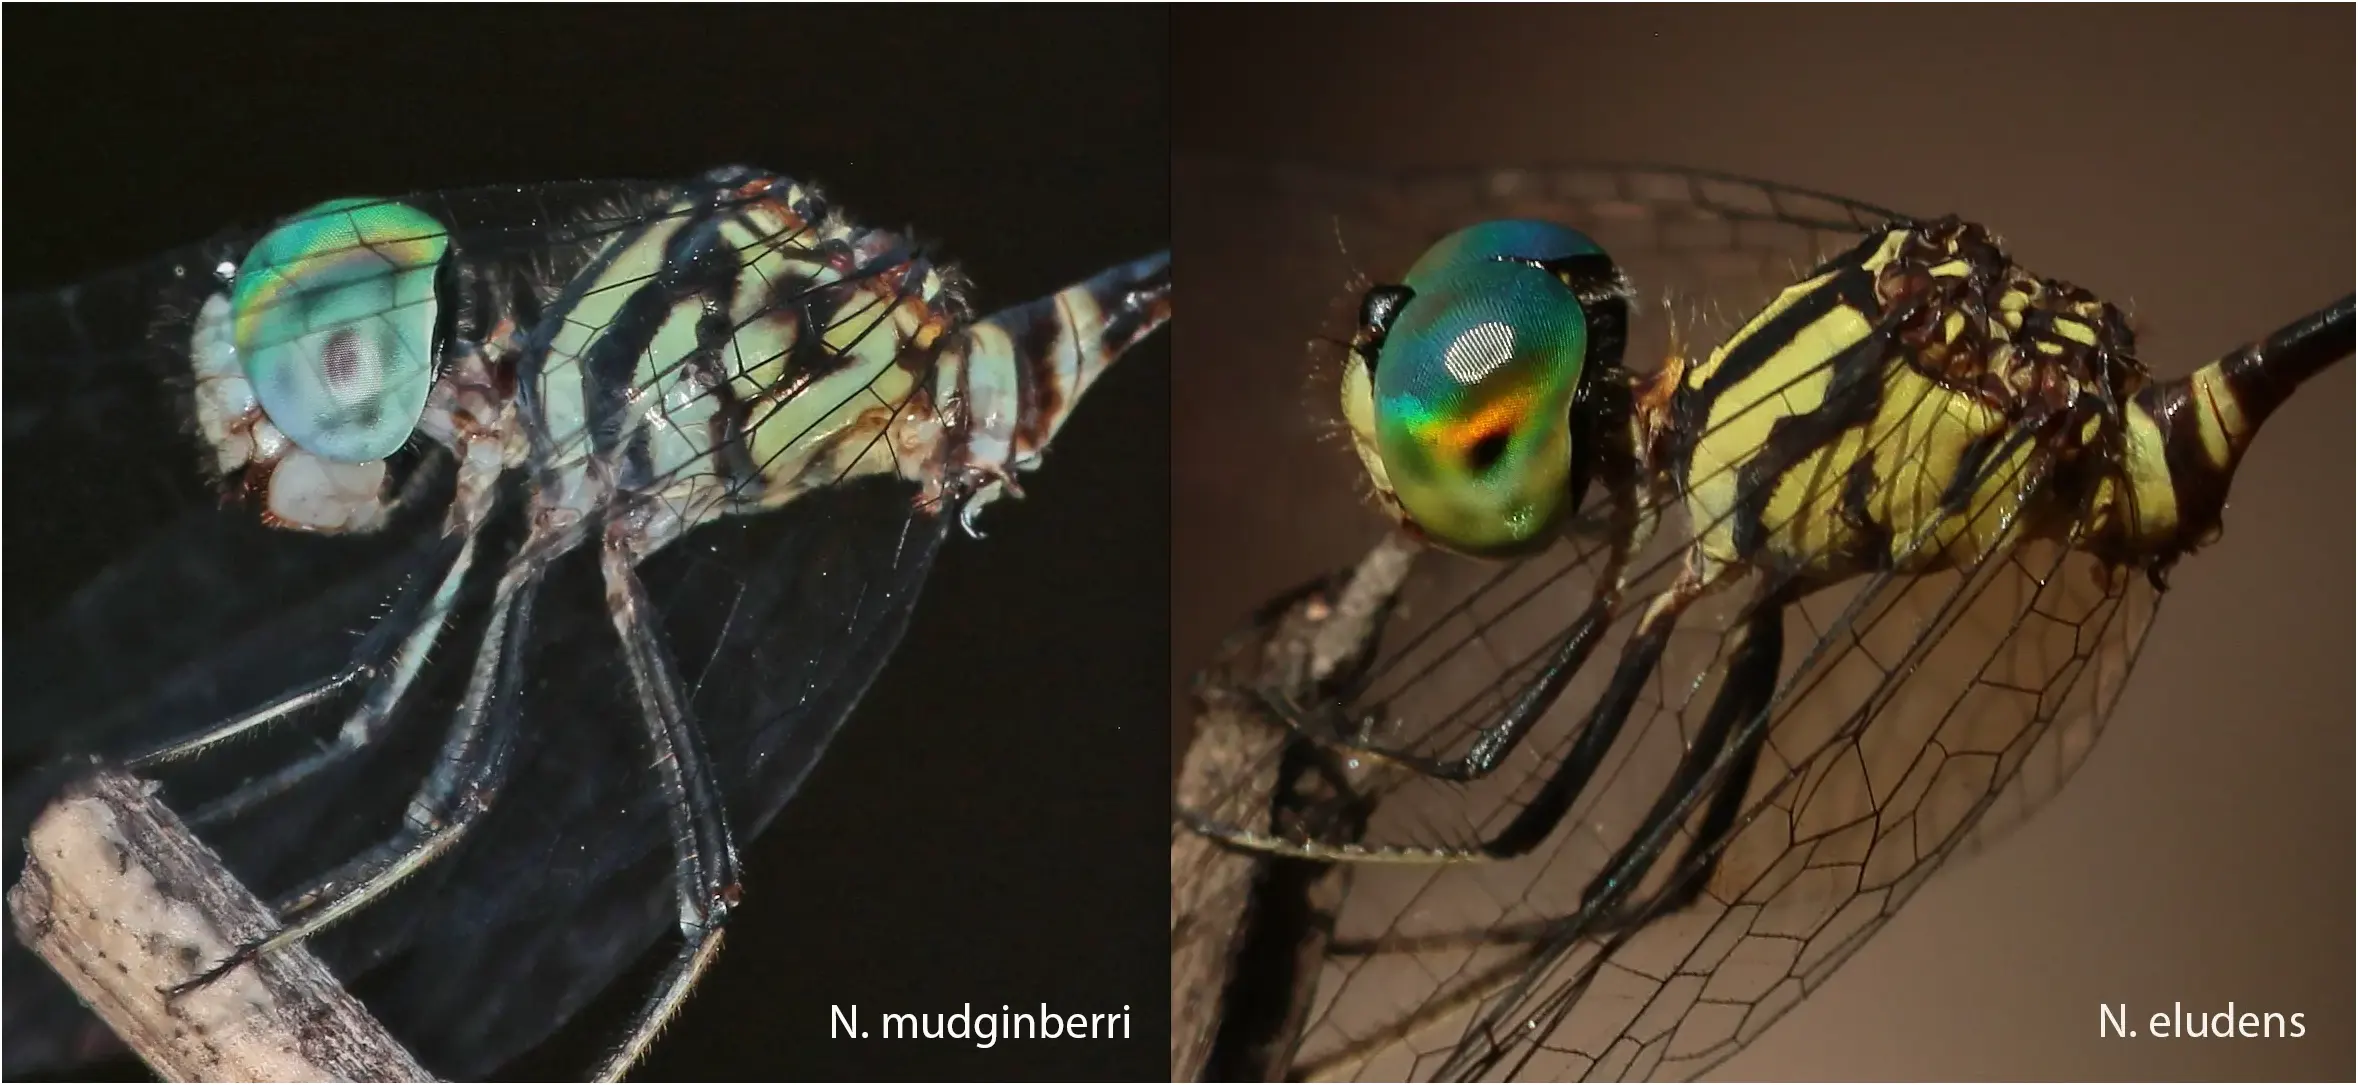 Comparaison des thorax de Nannophlebia eludens et mudginberri